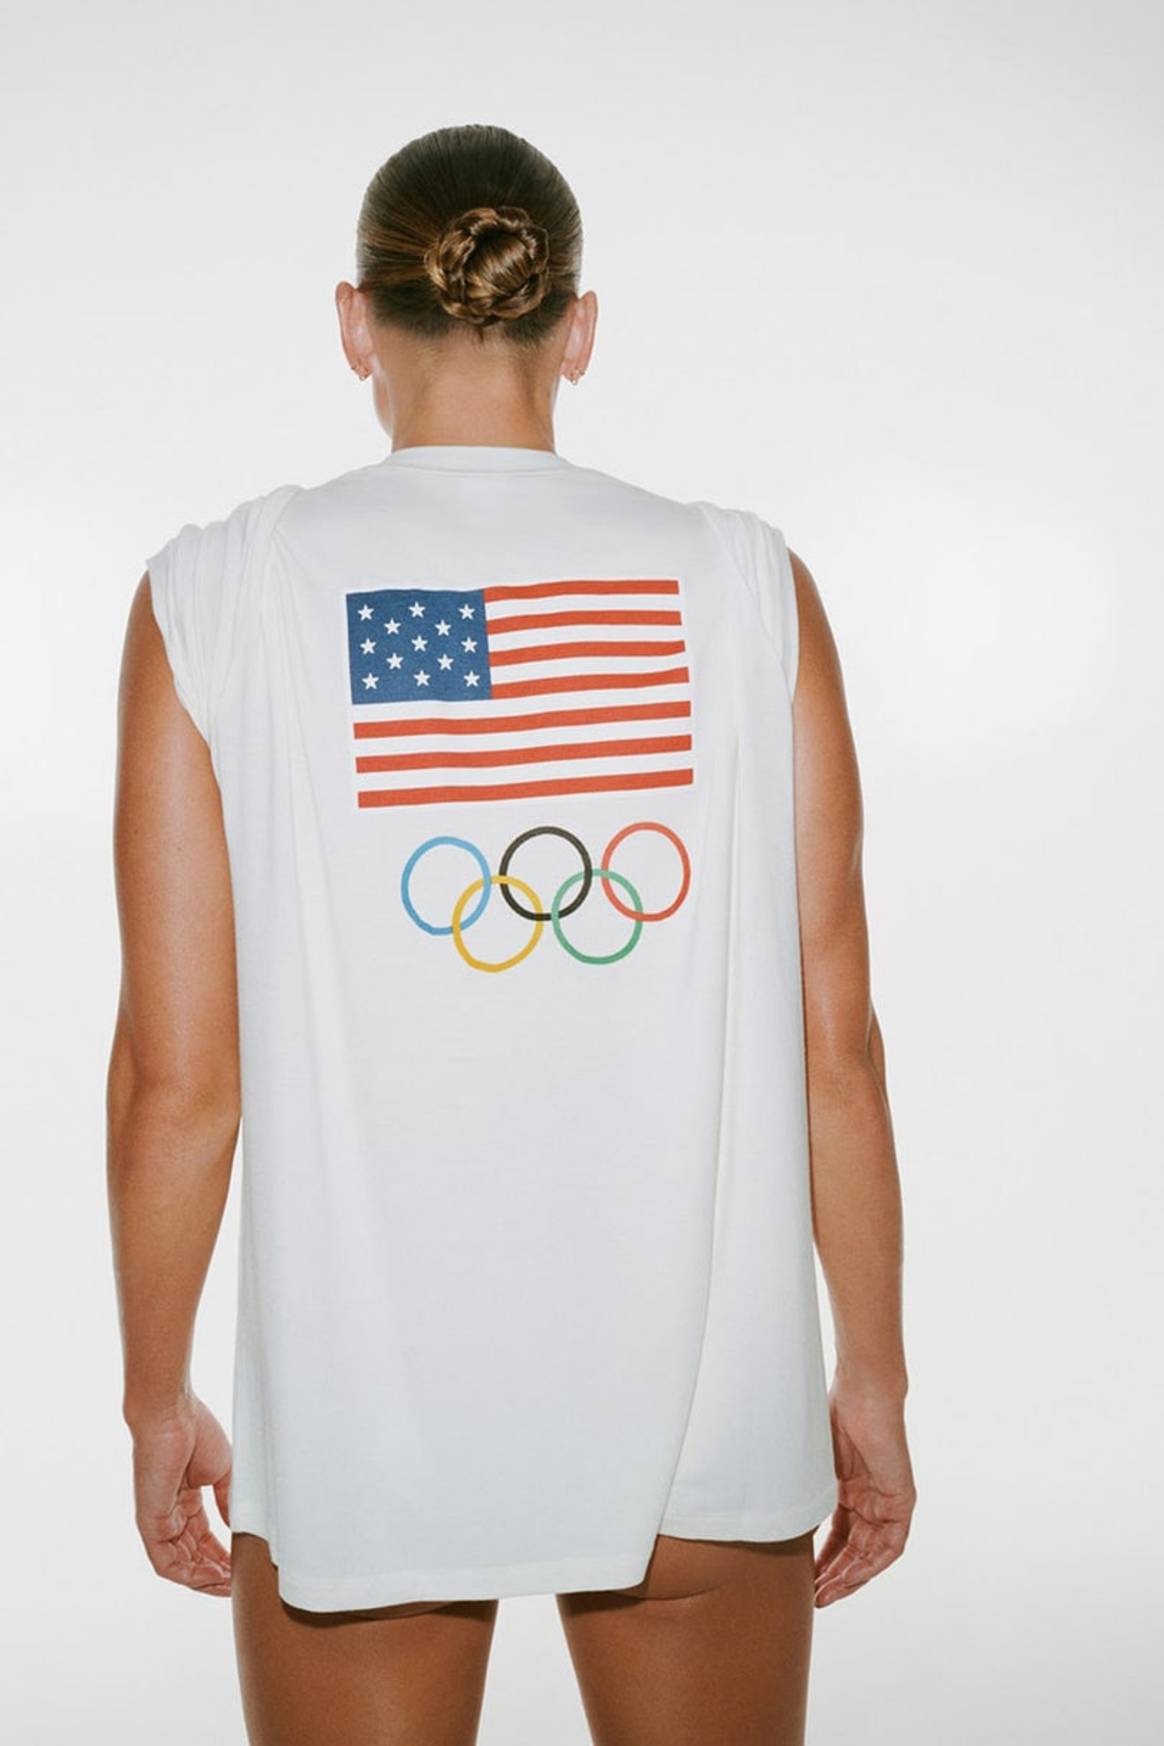 Бренд Ким Кардашьян Skims создал белье для олимпийской сборной США